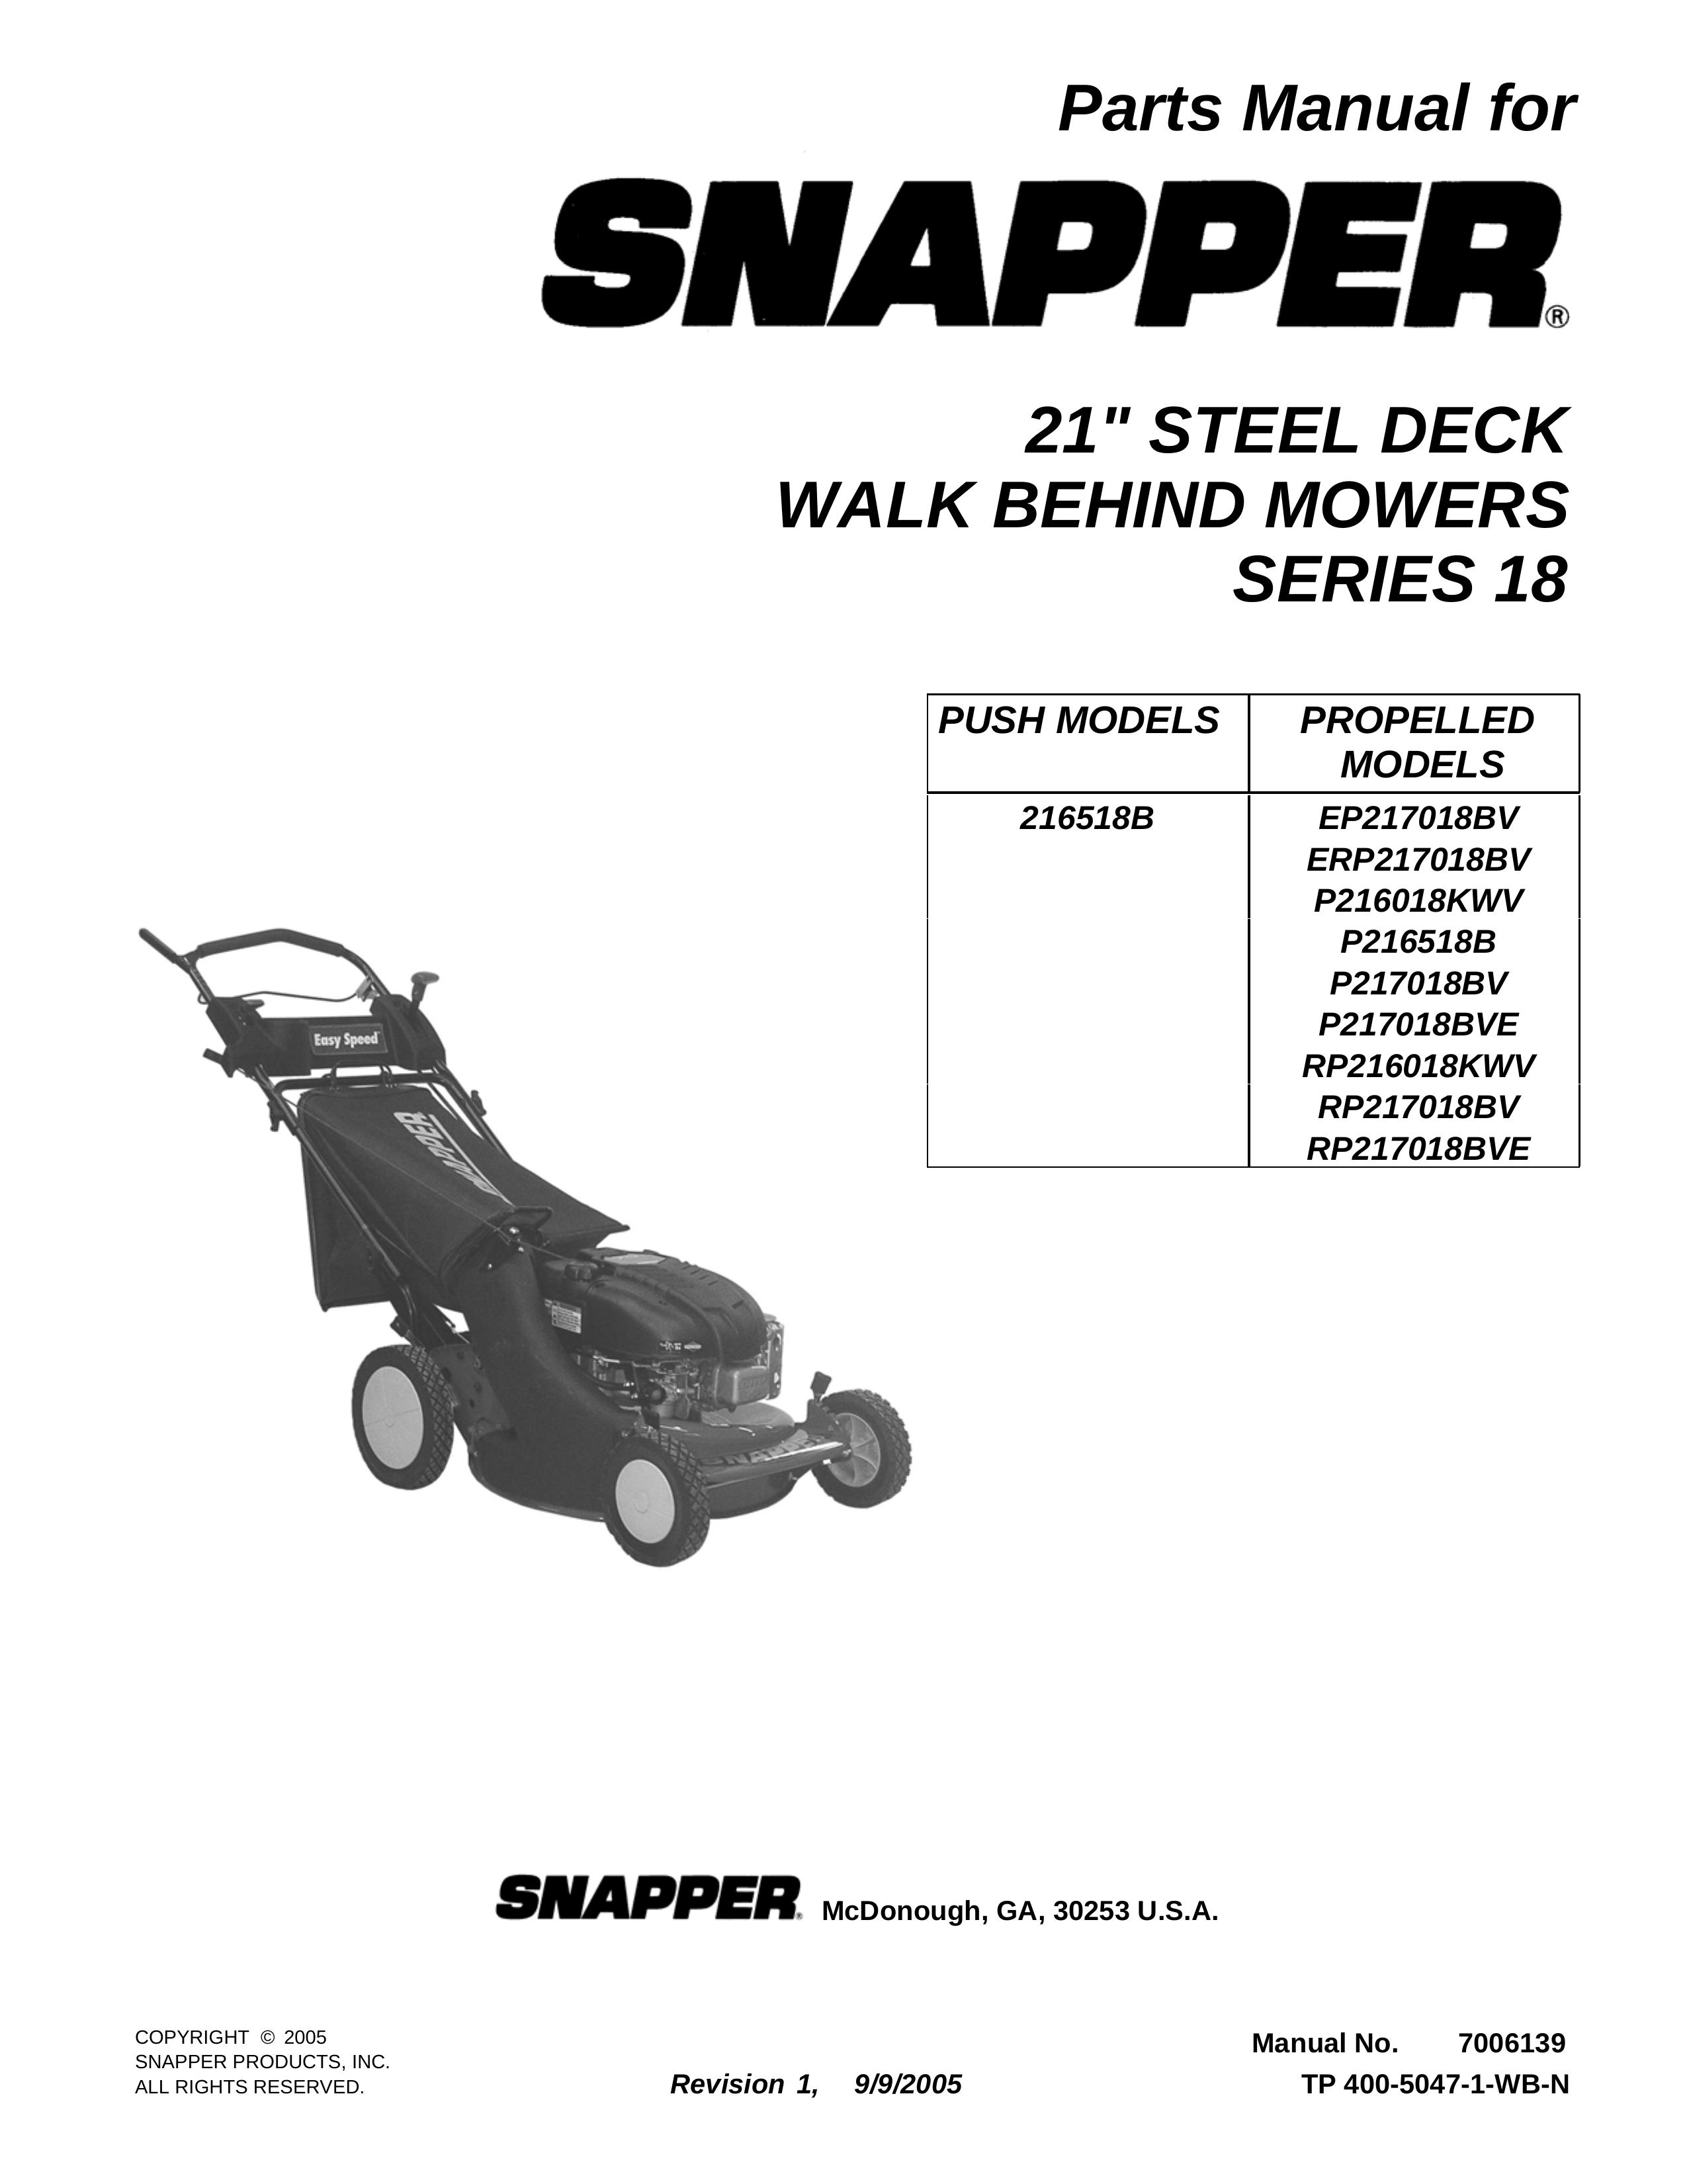 Snapper EP217018BV Camcorder User Manual